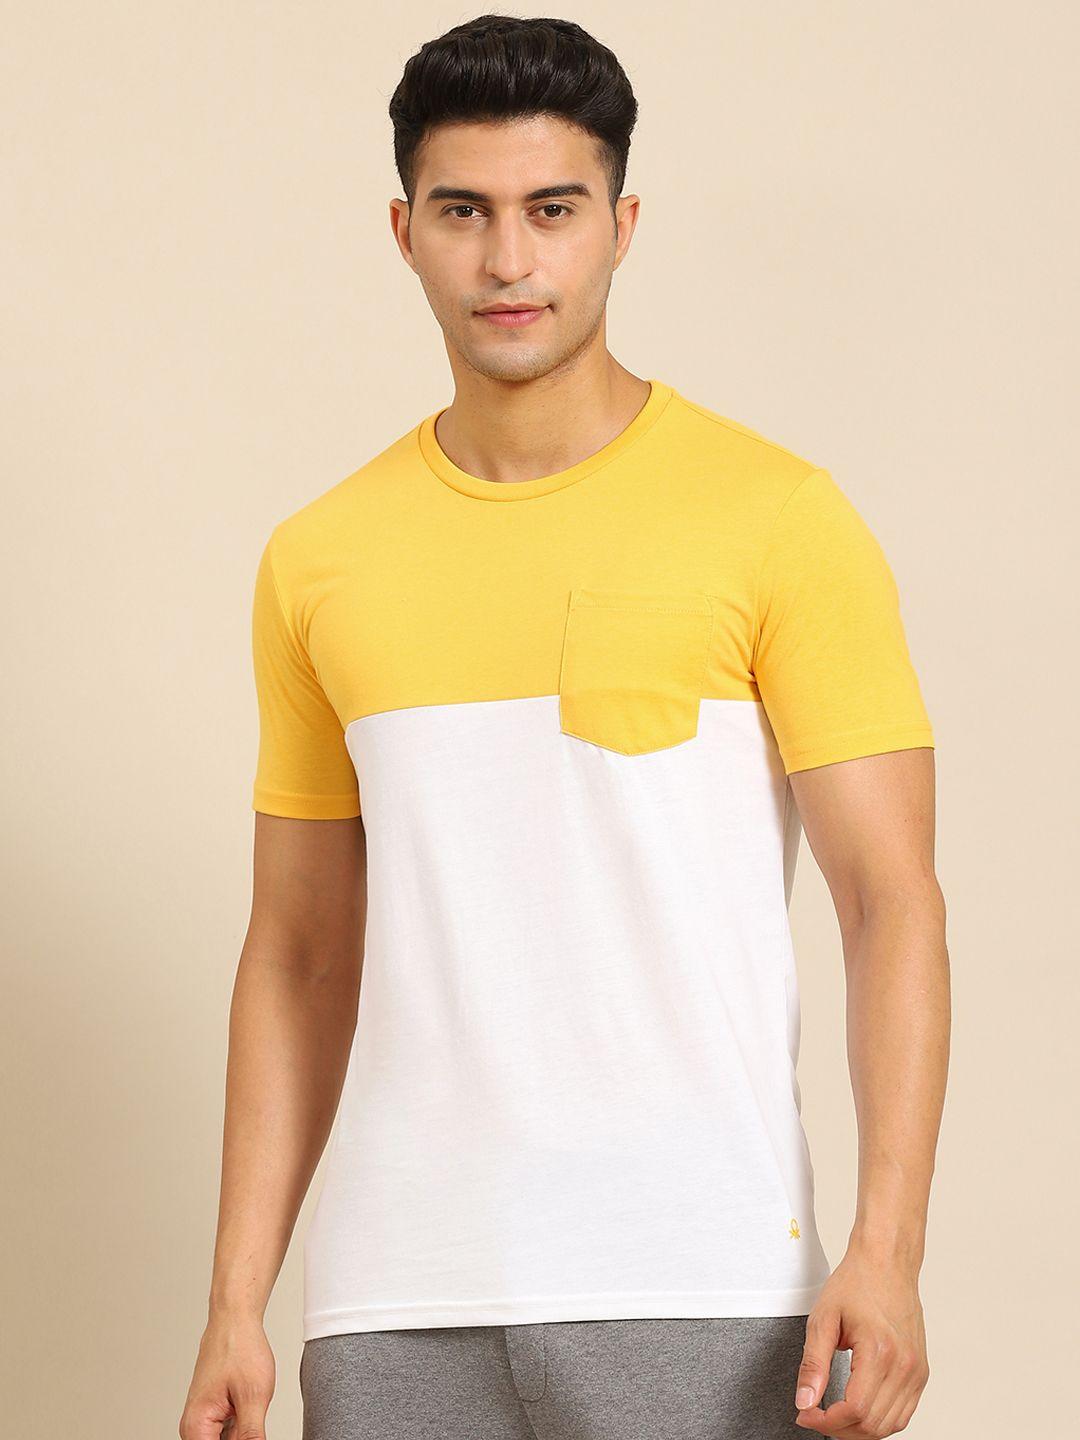 united colors of benetton men yellow & white colourblocked t-shirt